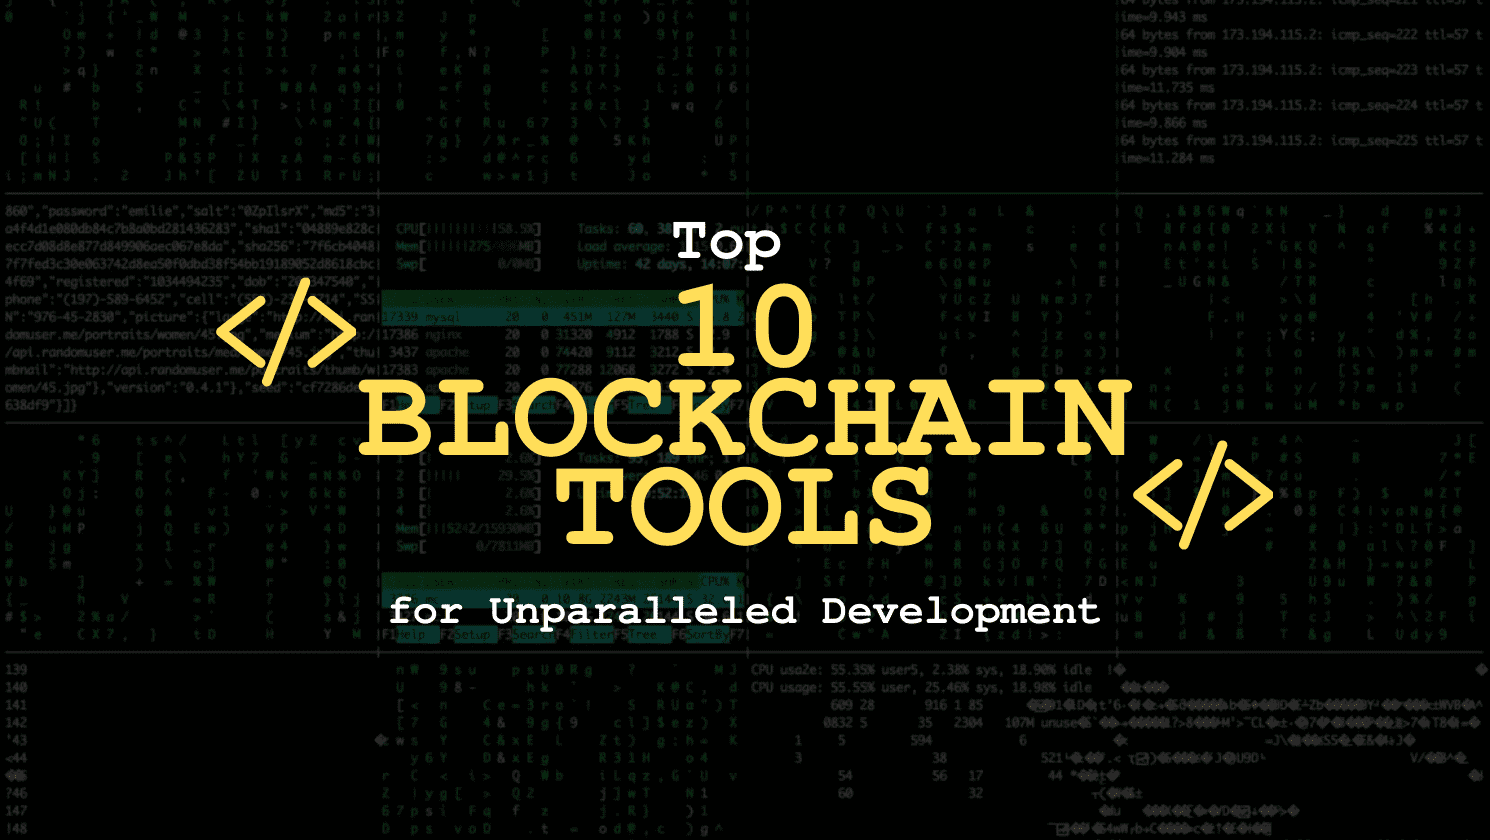 Top 10 Blockchain tools